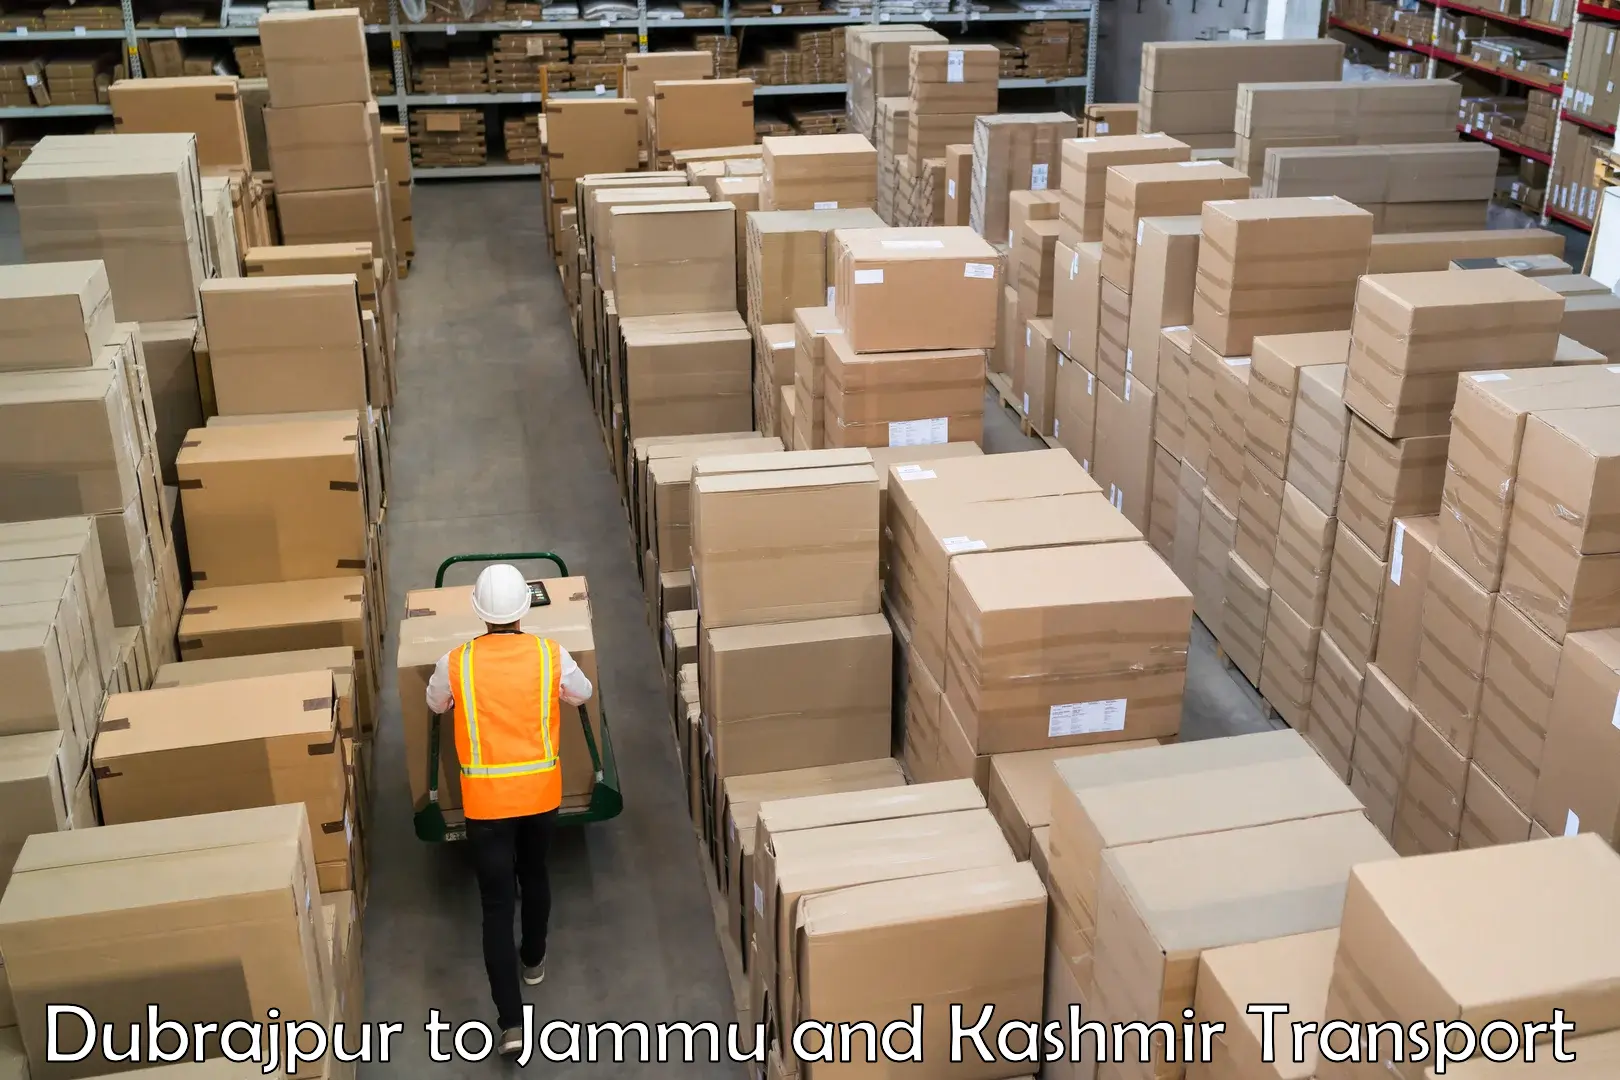 Daily parcel service transport Dubrajpur to Srinagar Kashmir